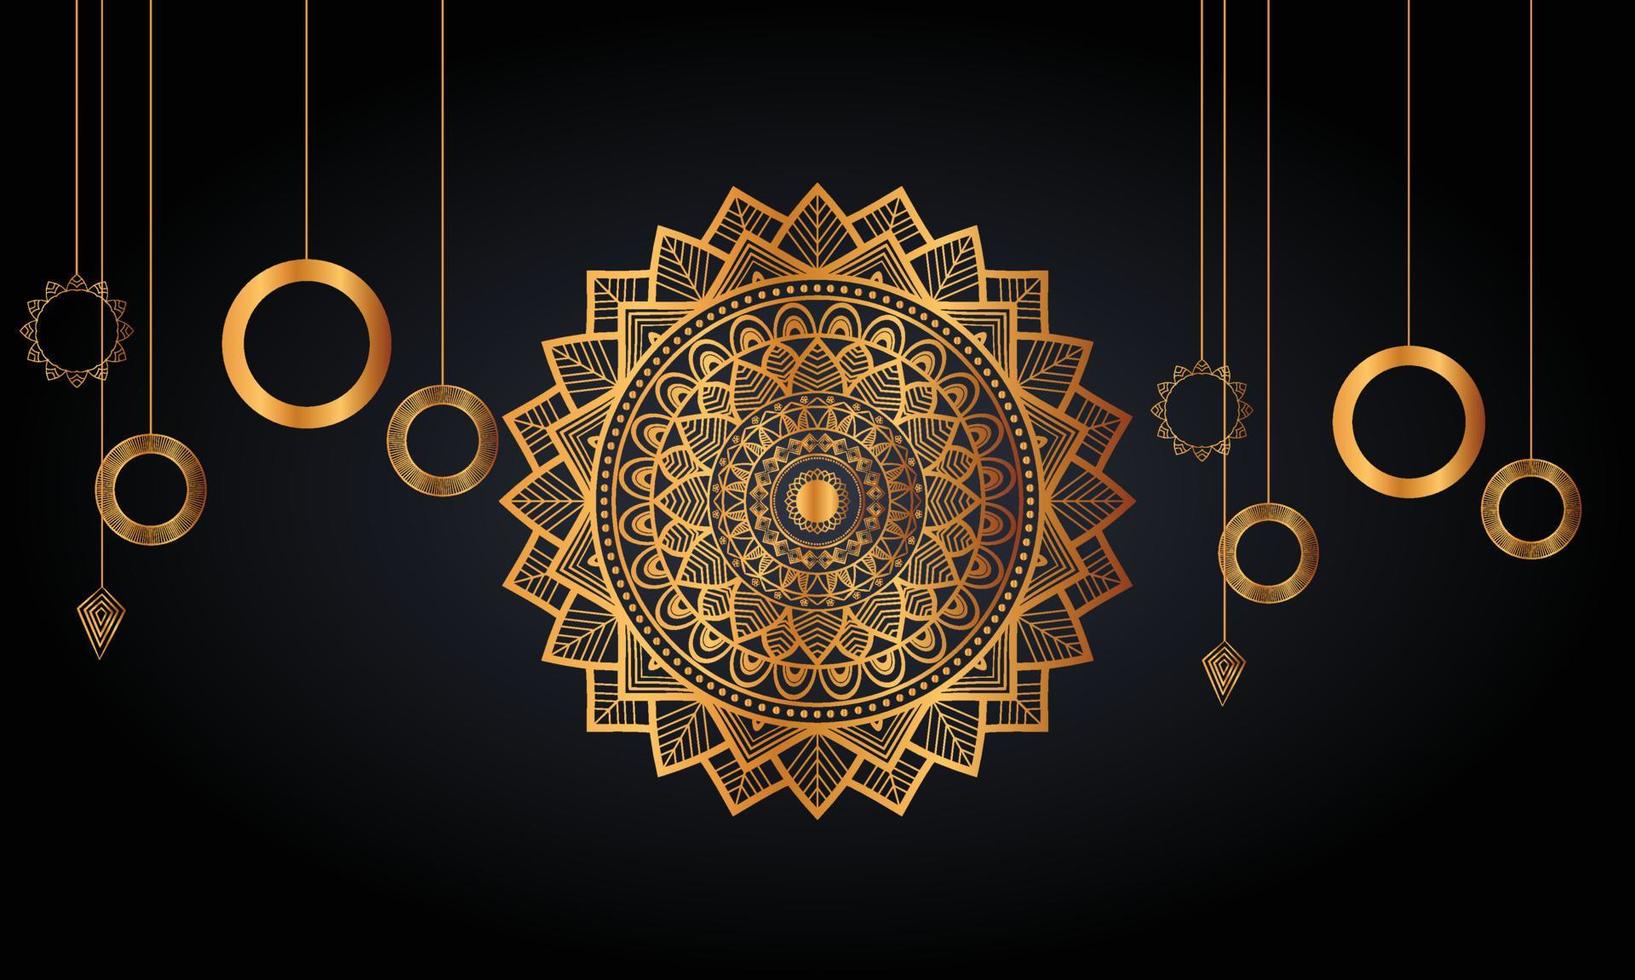 Luxury style golden mandala background vector